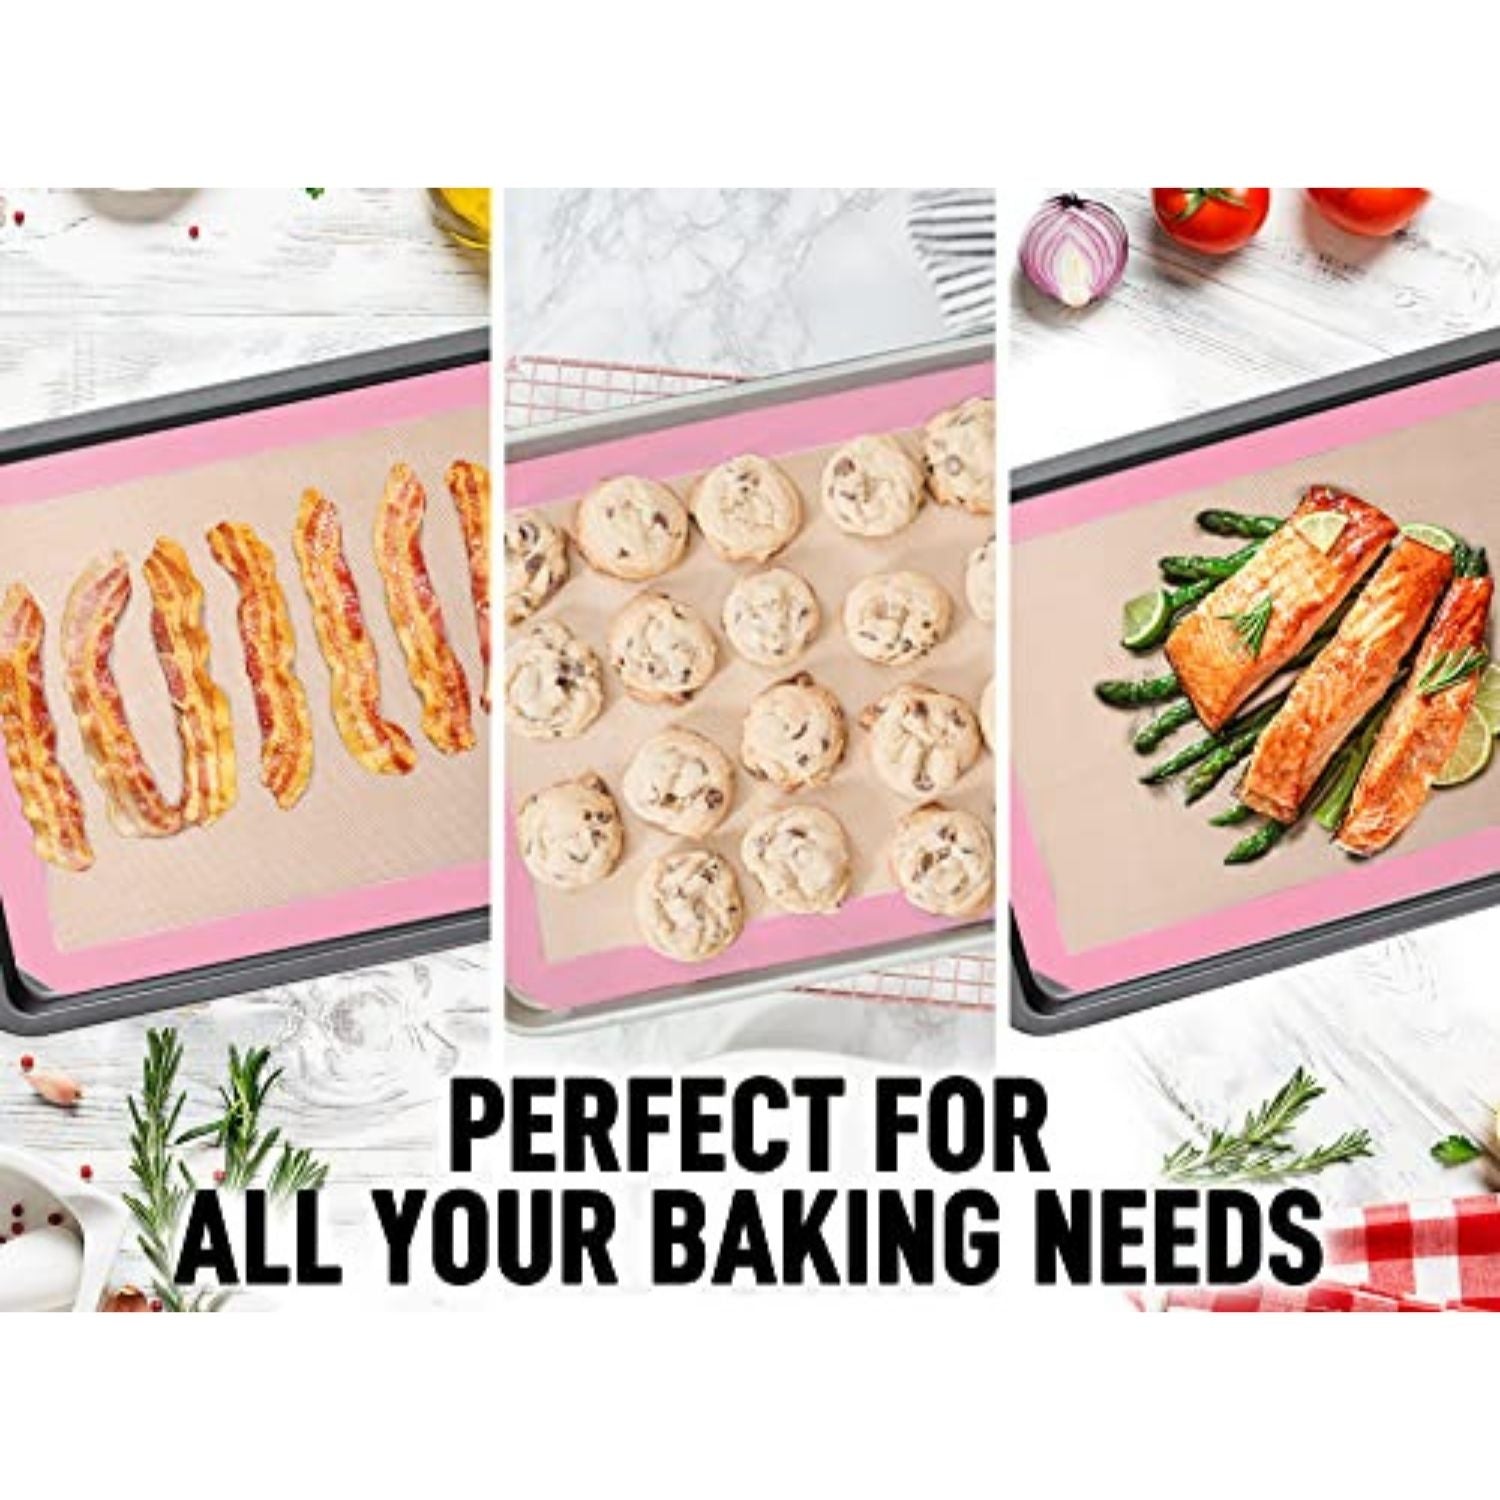 Zulay Kitchen Silicone Baking Mat Sheet 2-Pack - Pink, 2 - City Market